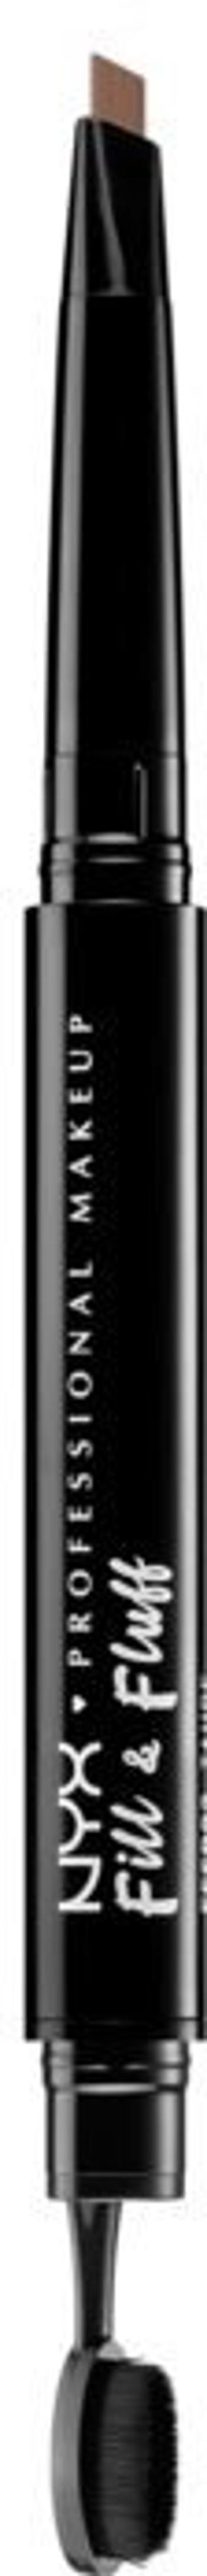 NYX Professional Makeup Fill & Fluff Eyebrow Pomade Pencil ceruzka na obočie - Blonde 0.2 g